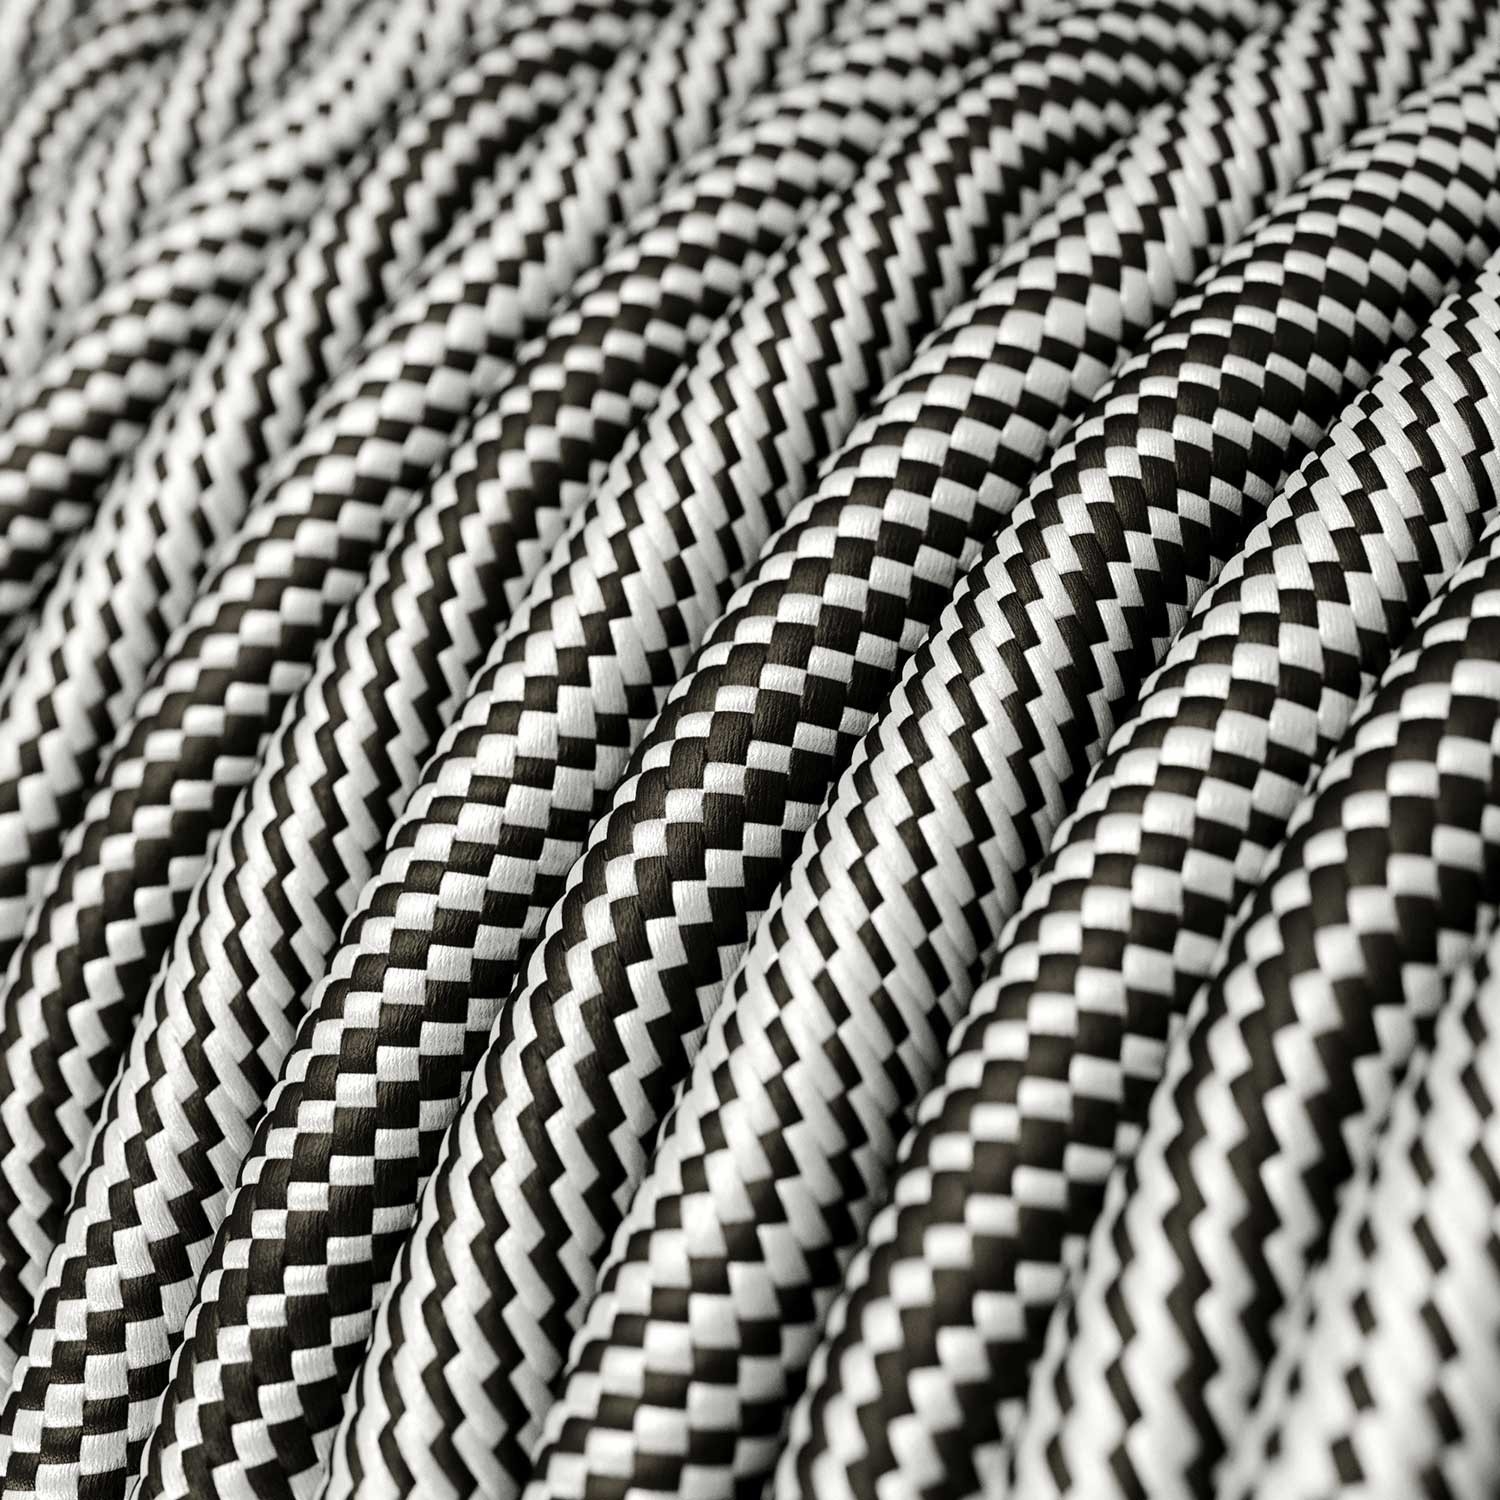 ERM64 Black and Silver Vertigo HD Optical Round Electrical Fabric Cloth Cord Cable